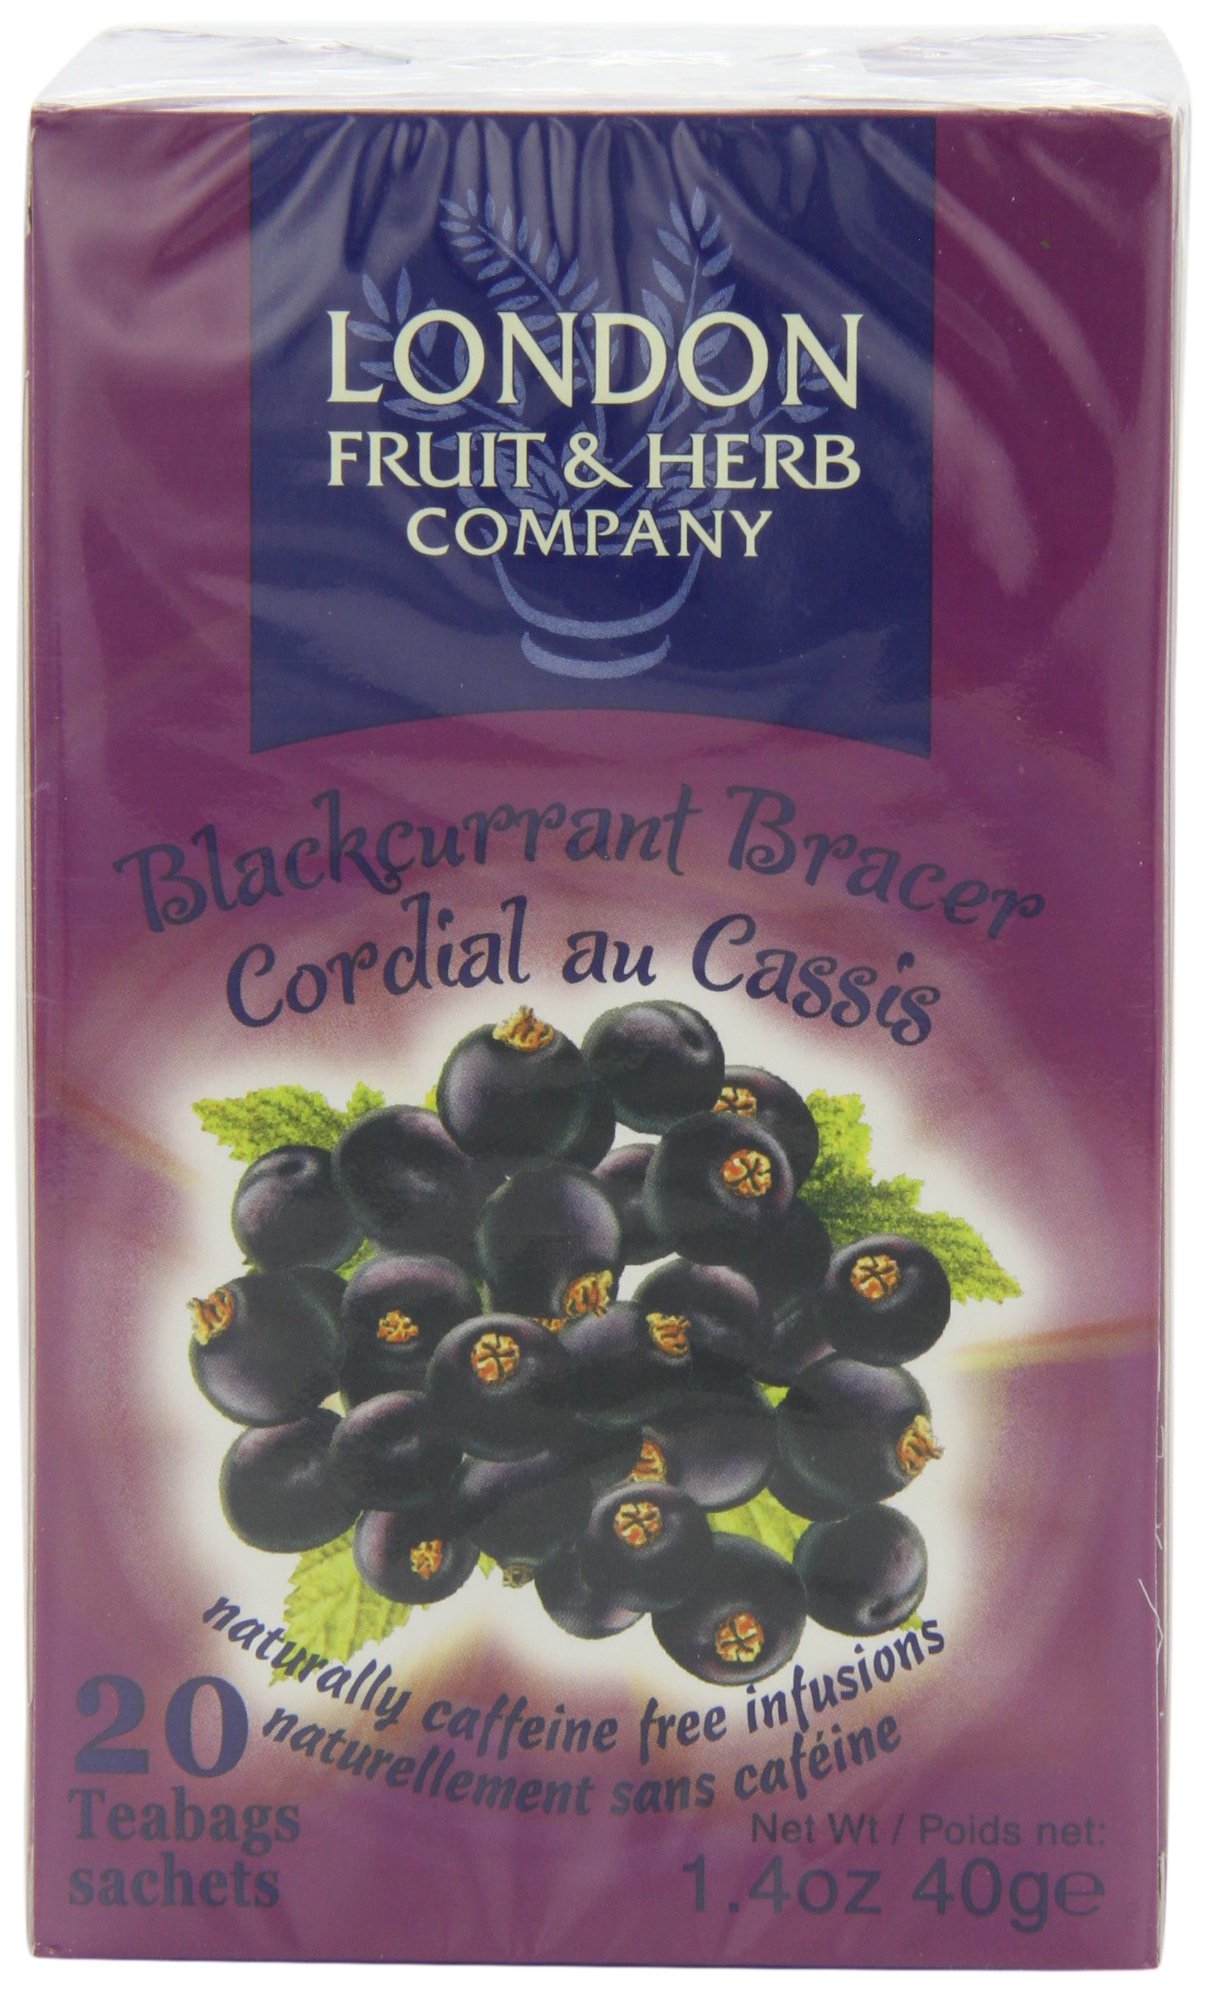 London Fruit & Herb Company Blackcurrant Bracer Tea, 20 Count Tea Bags (Pack of 6)